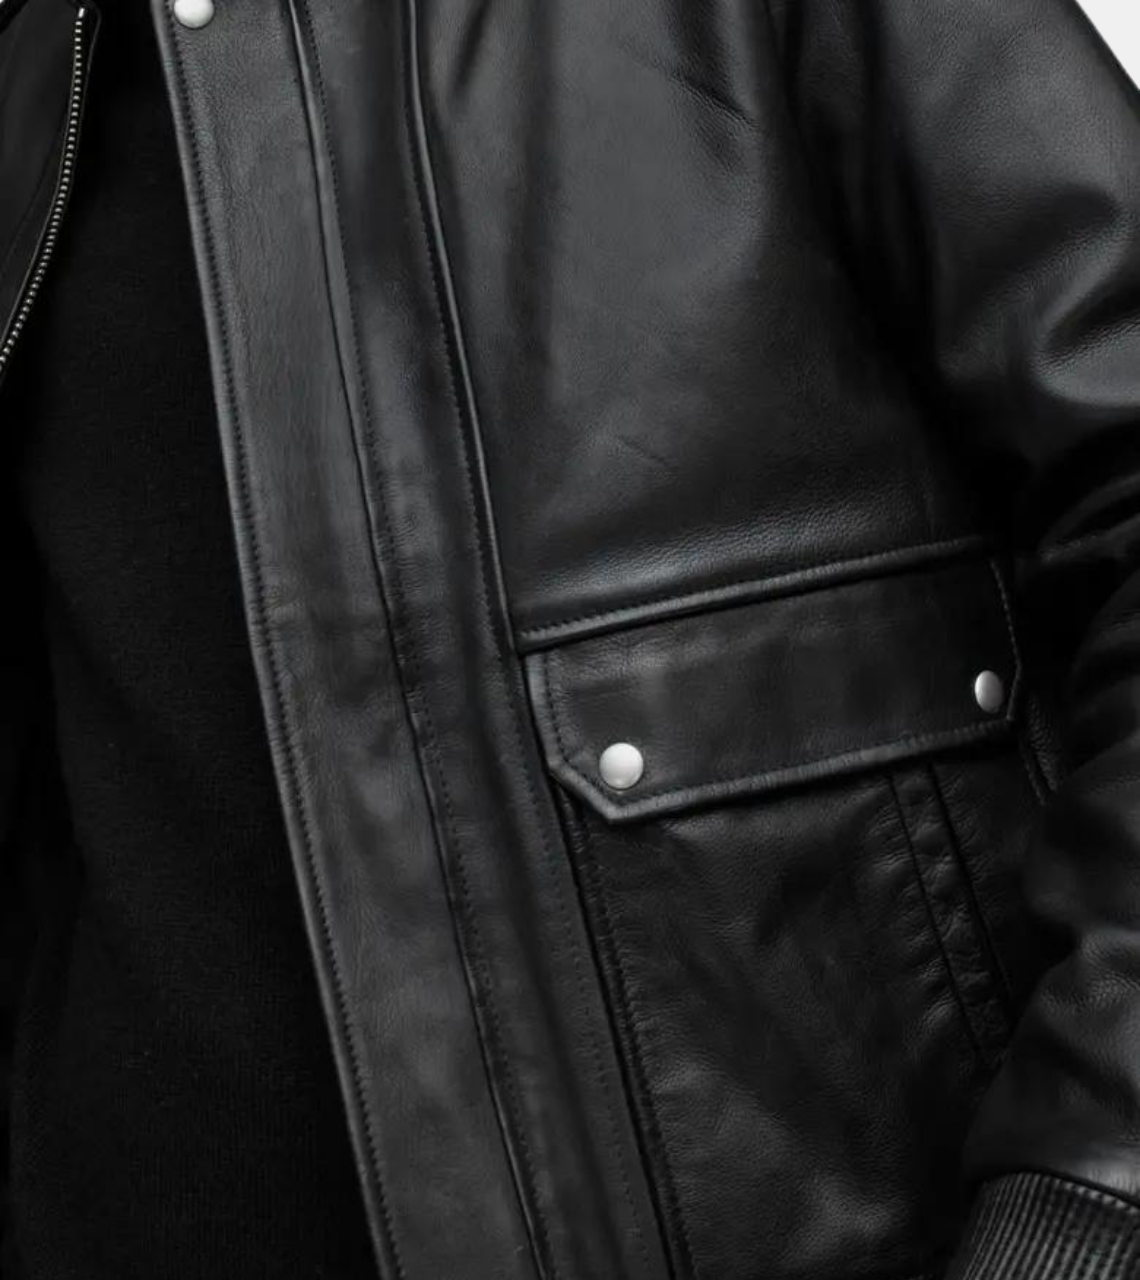  Elliot Men's Black Bomber Leather Aviator Jacket  Pocket